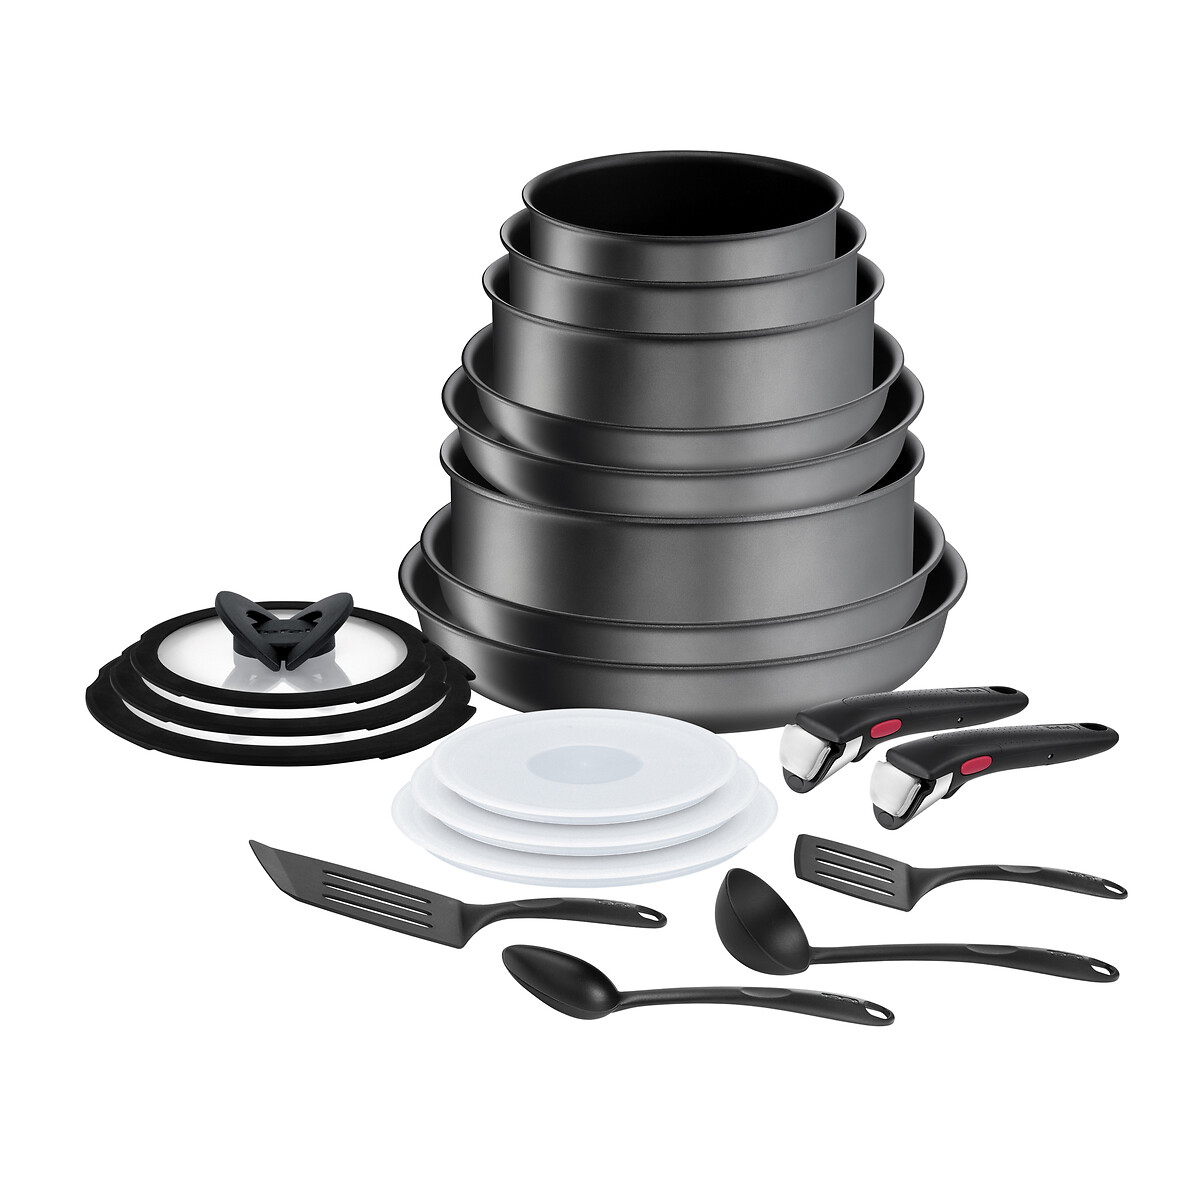 Ingenio Daily Chef 20-Piece Cookware Set